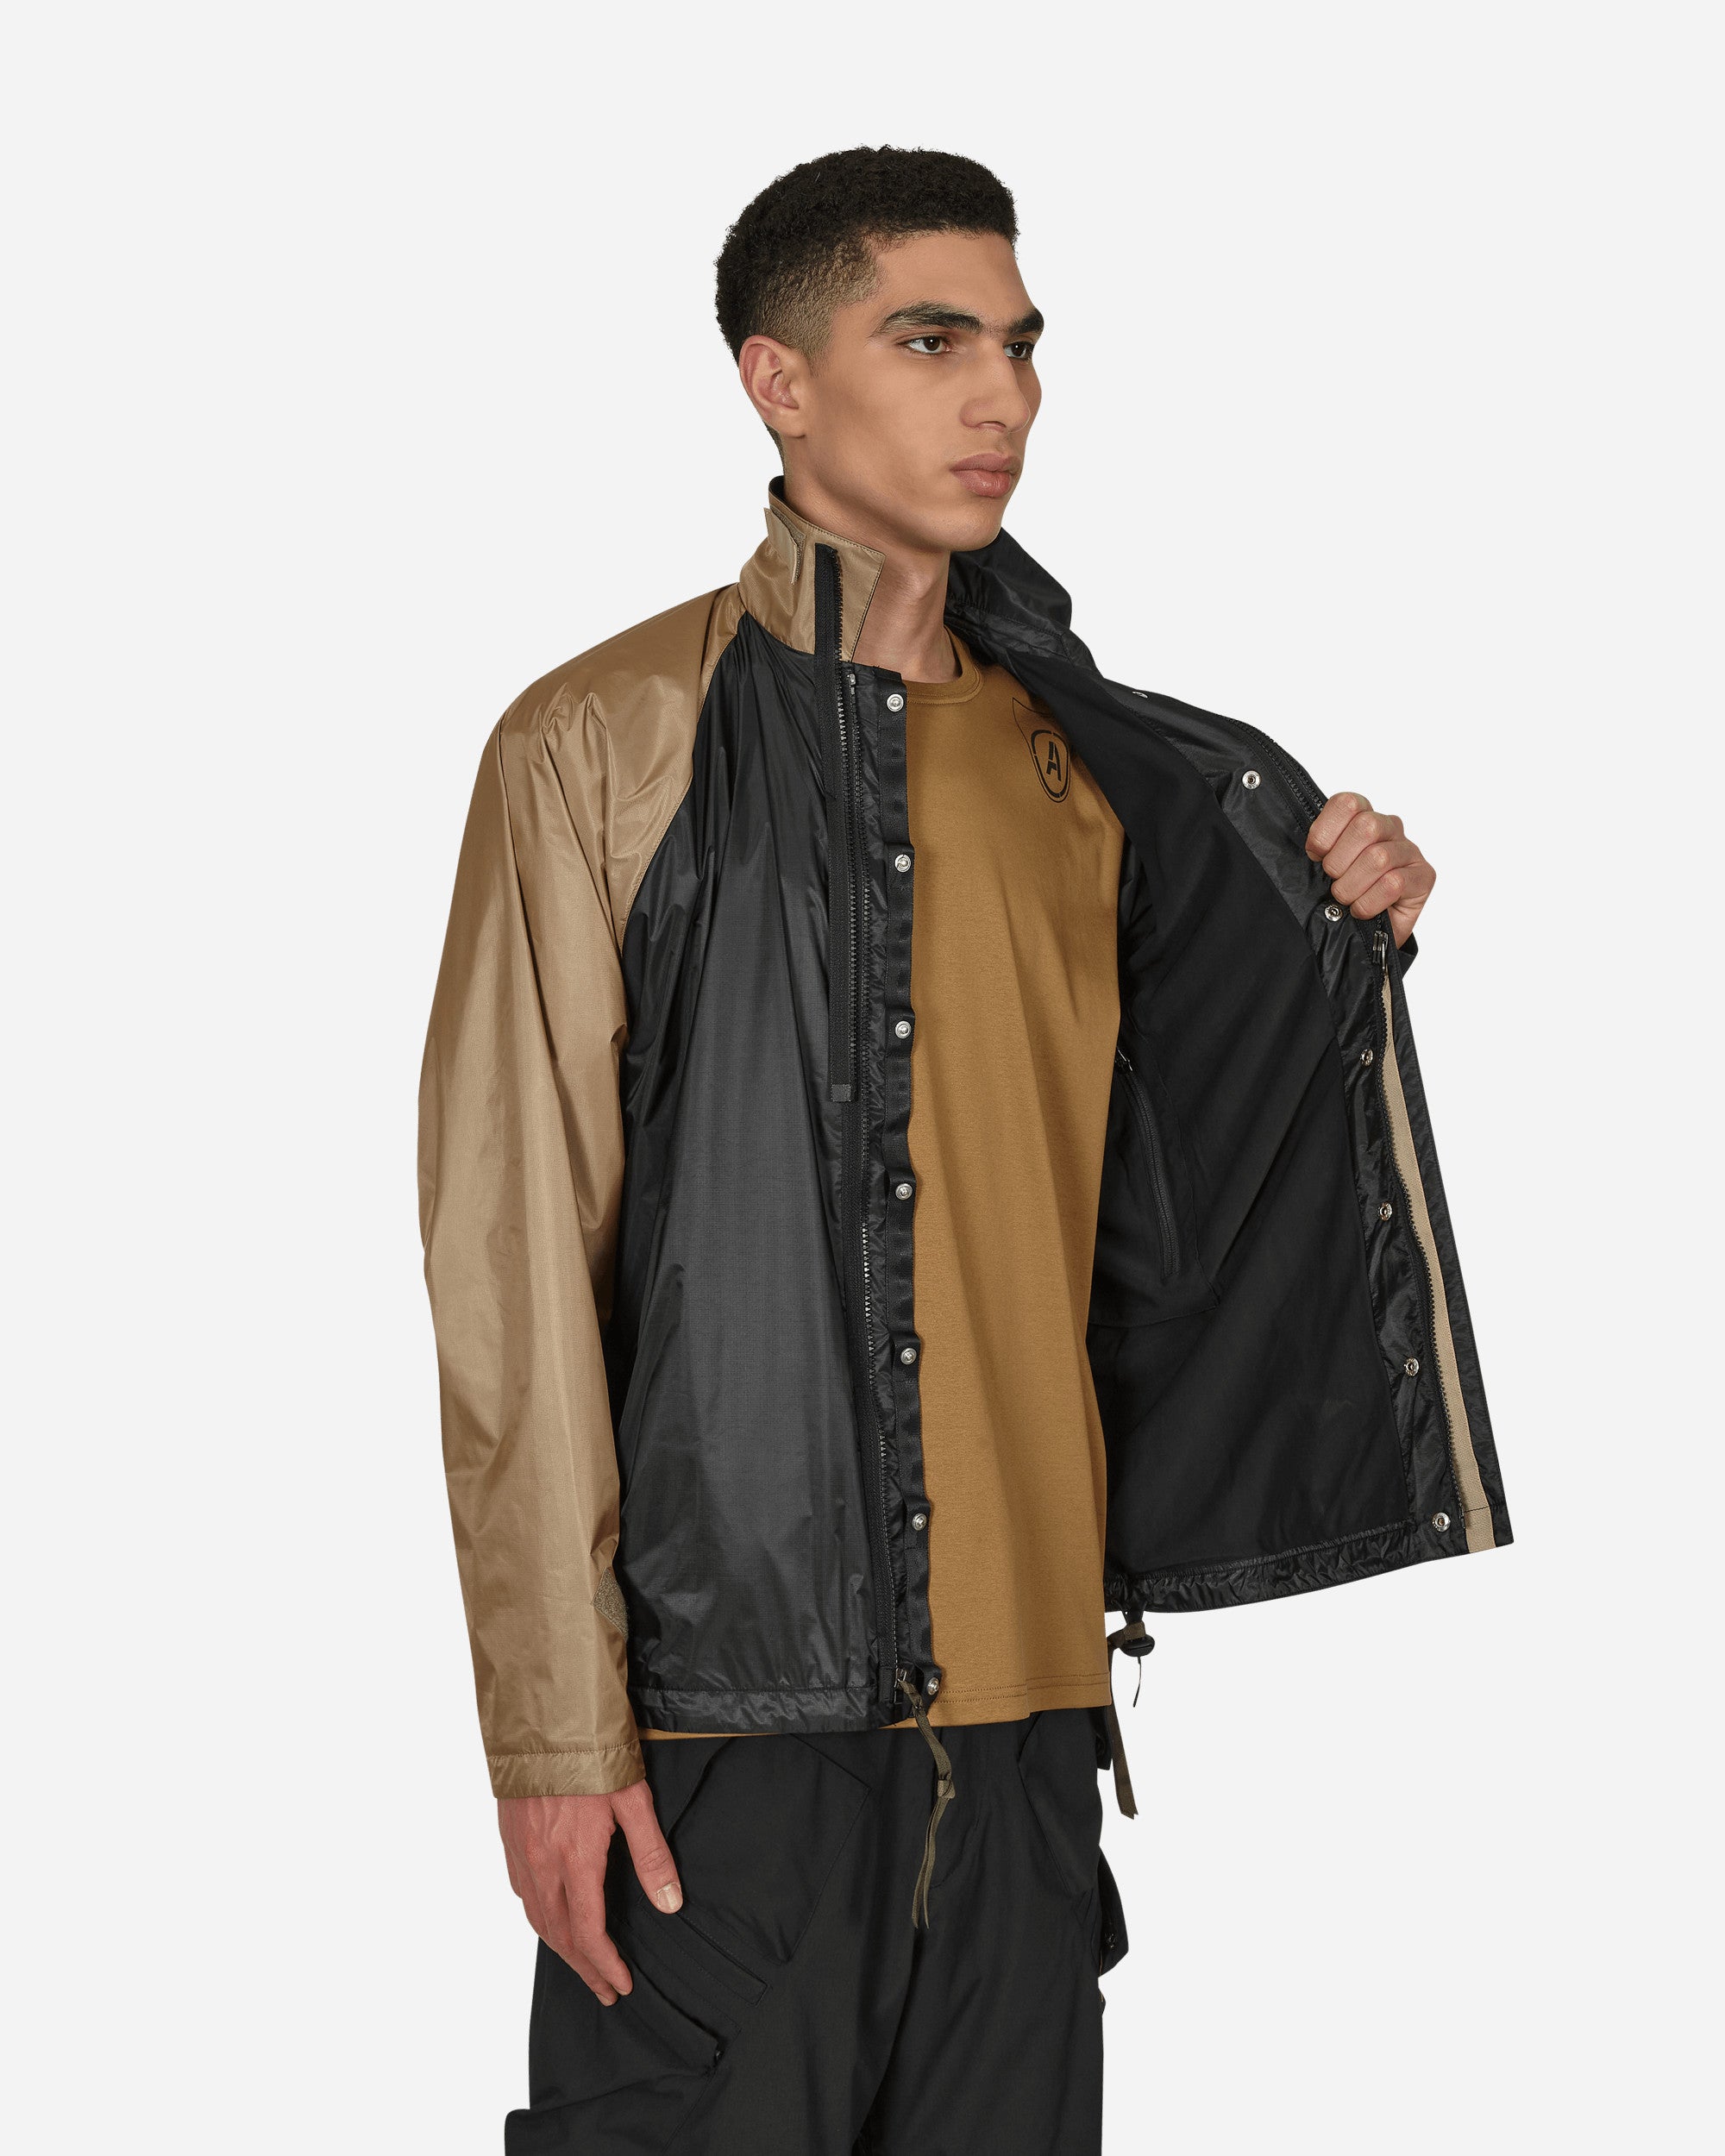 Acronym Jacket Blackkhaki Coats and Jackets Jackets J95-WS BLACKKHAKI